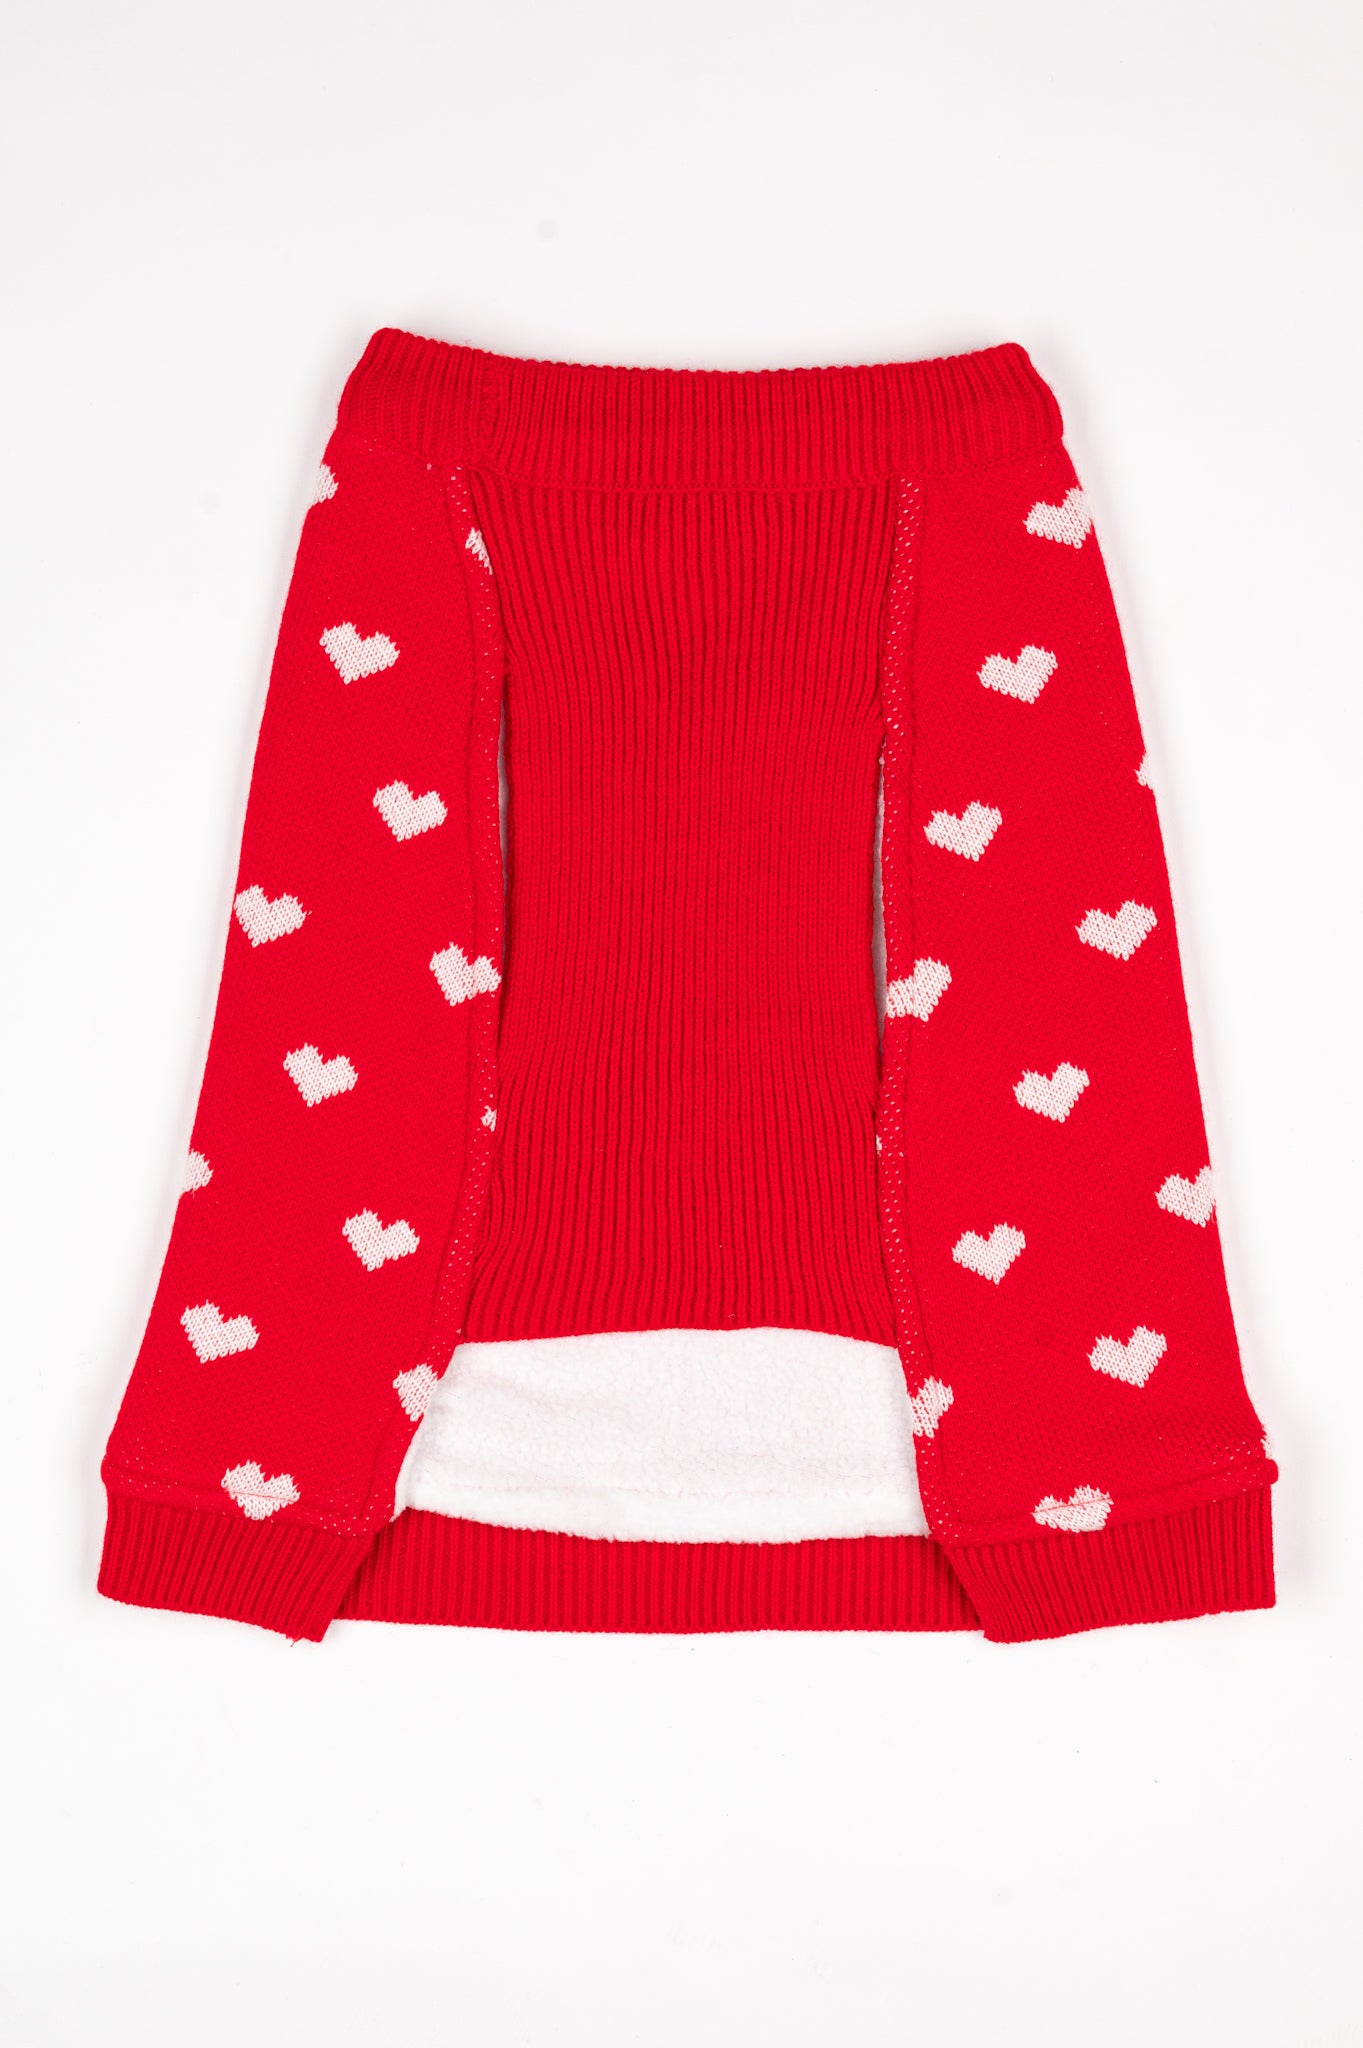 Petsnugs Red Heart Sweater - Red & White